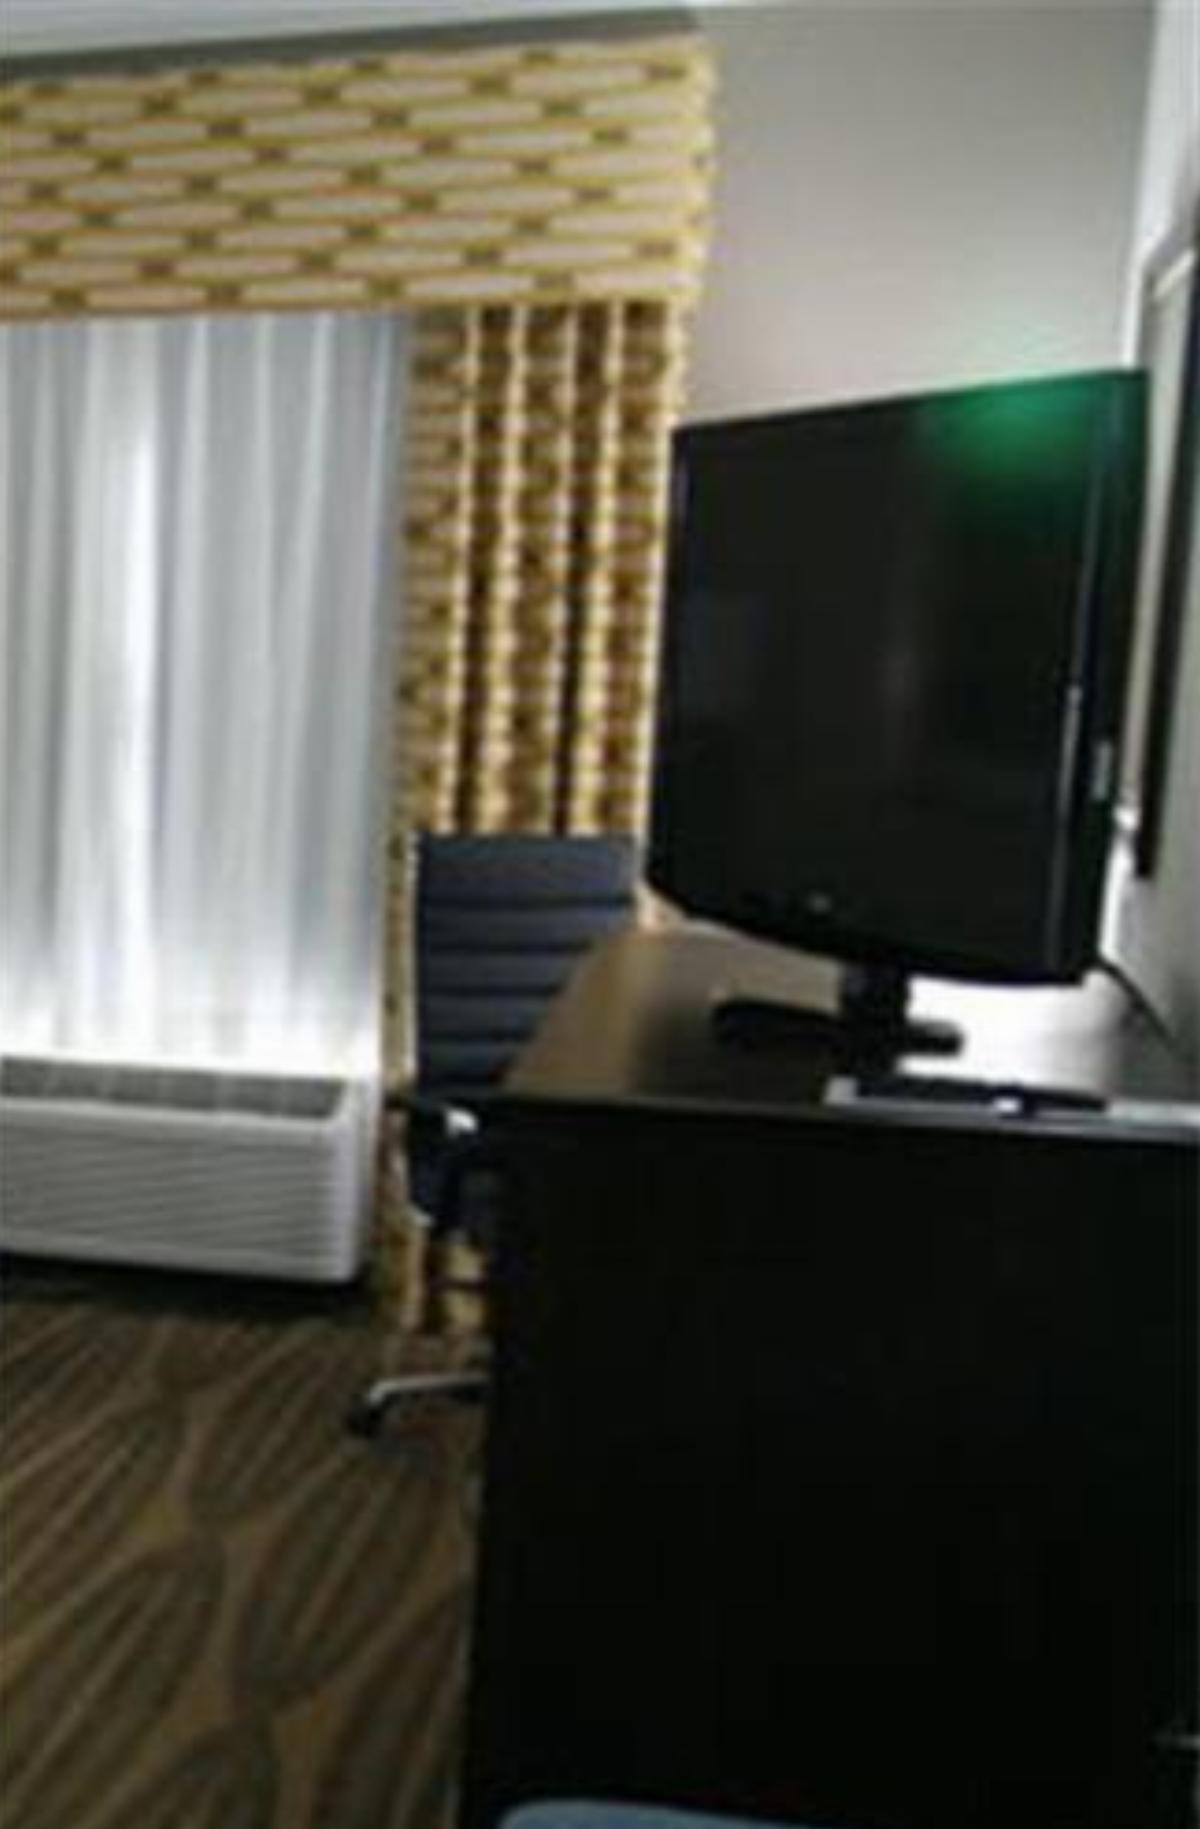 Holiday Inn Express & Suites Corpus Christi - North